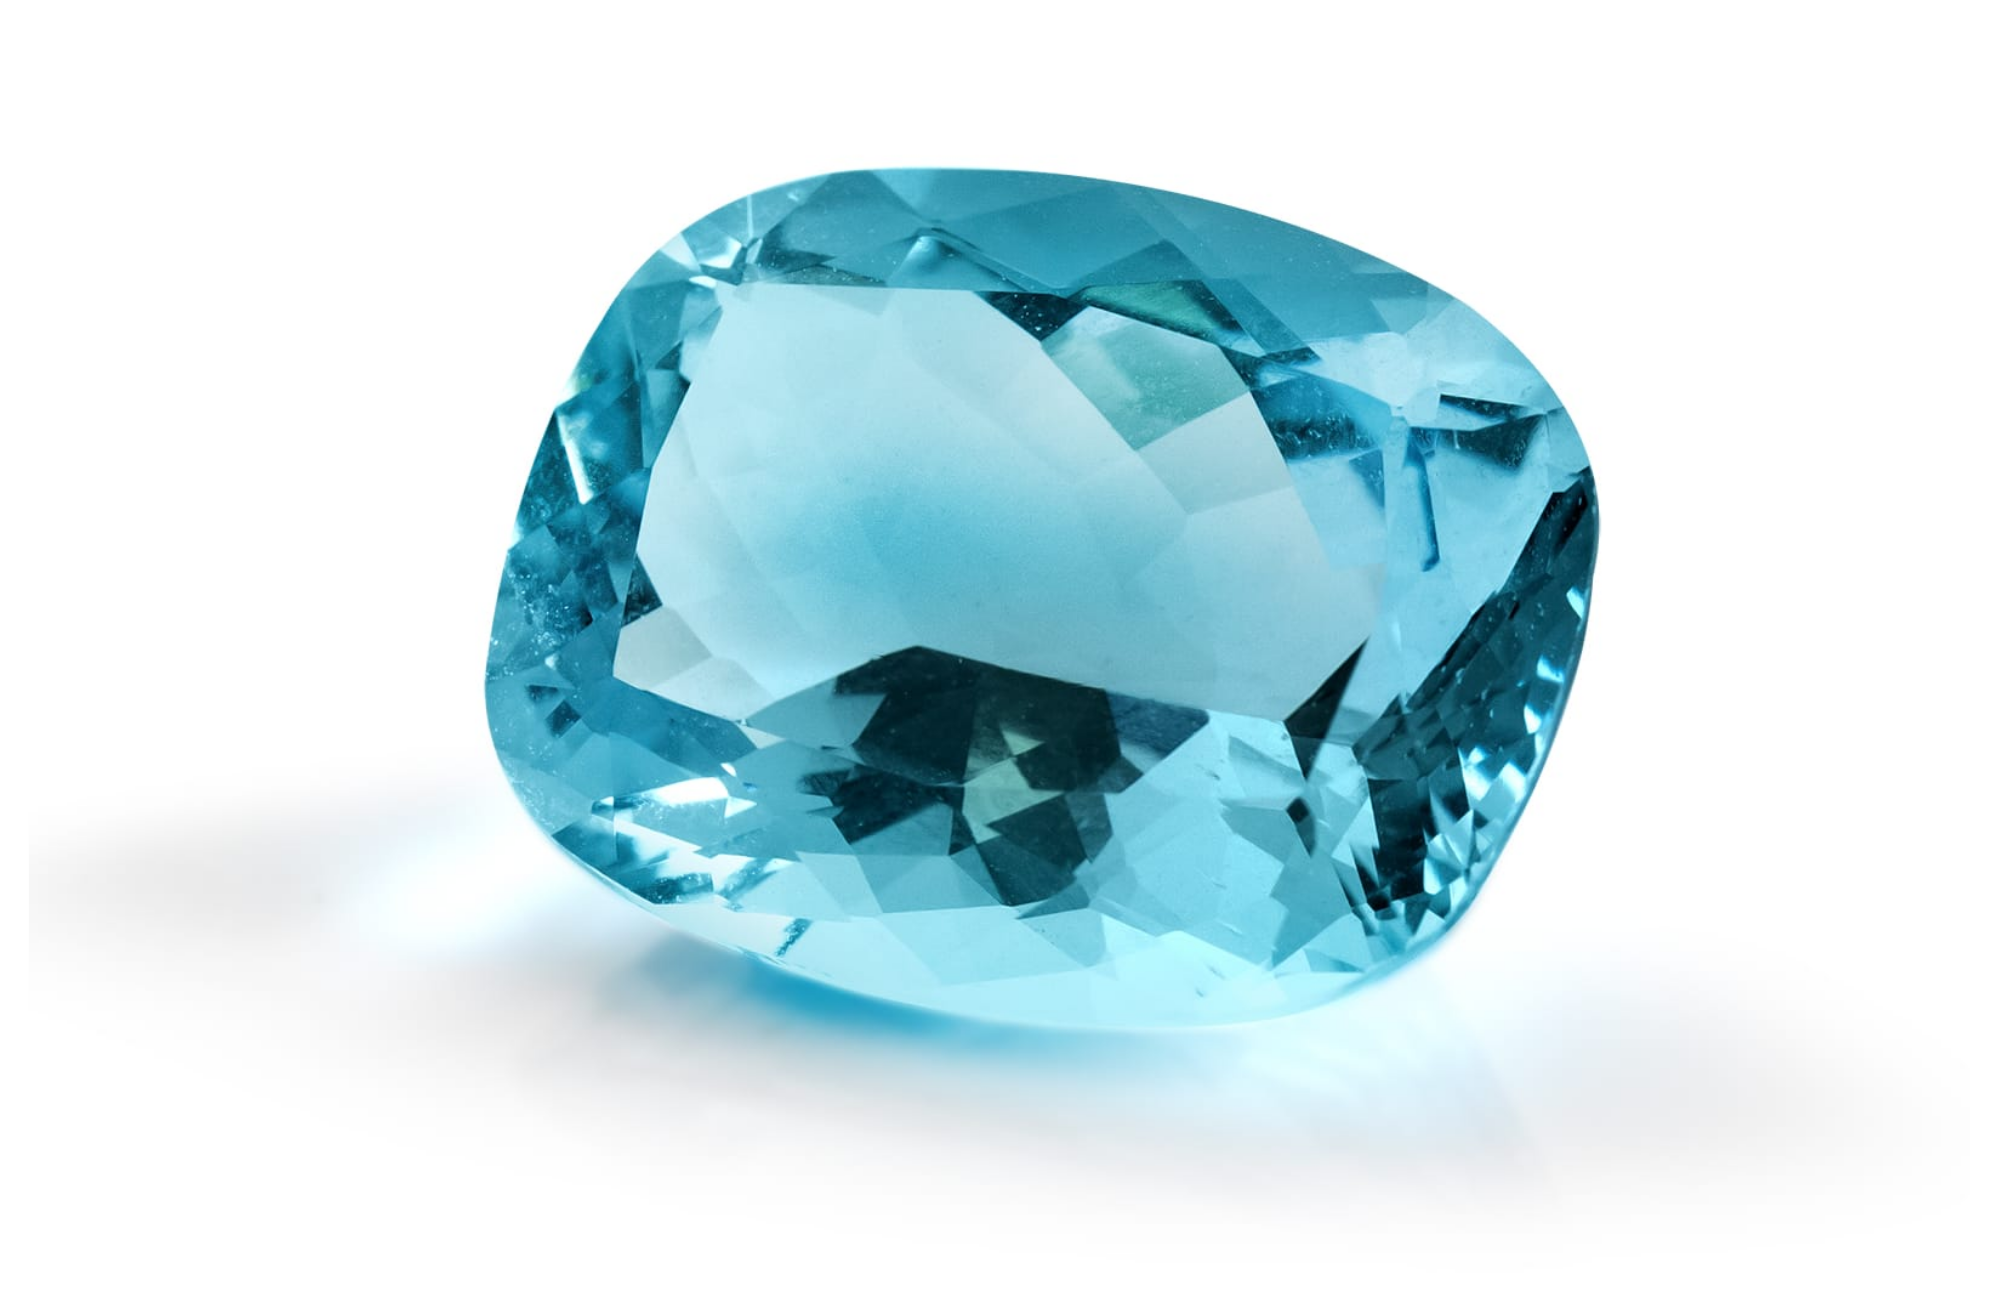 Oblong-shaped aquamarine gem